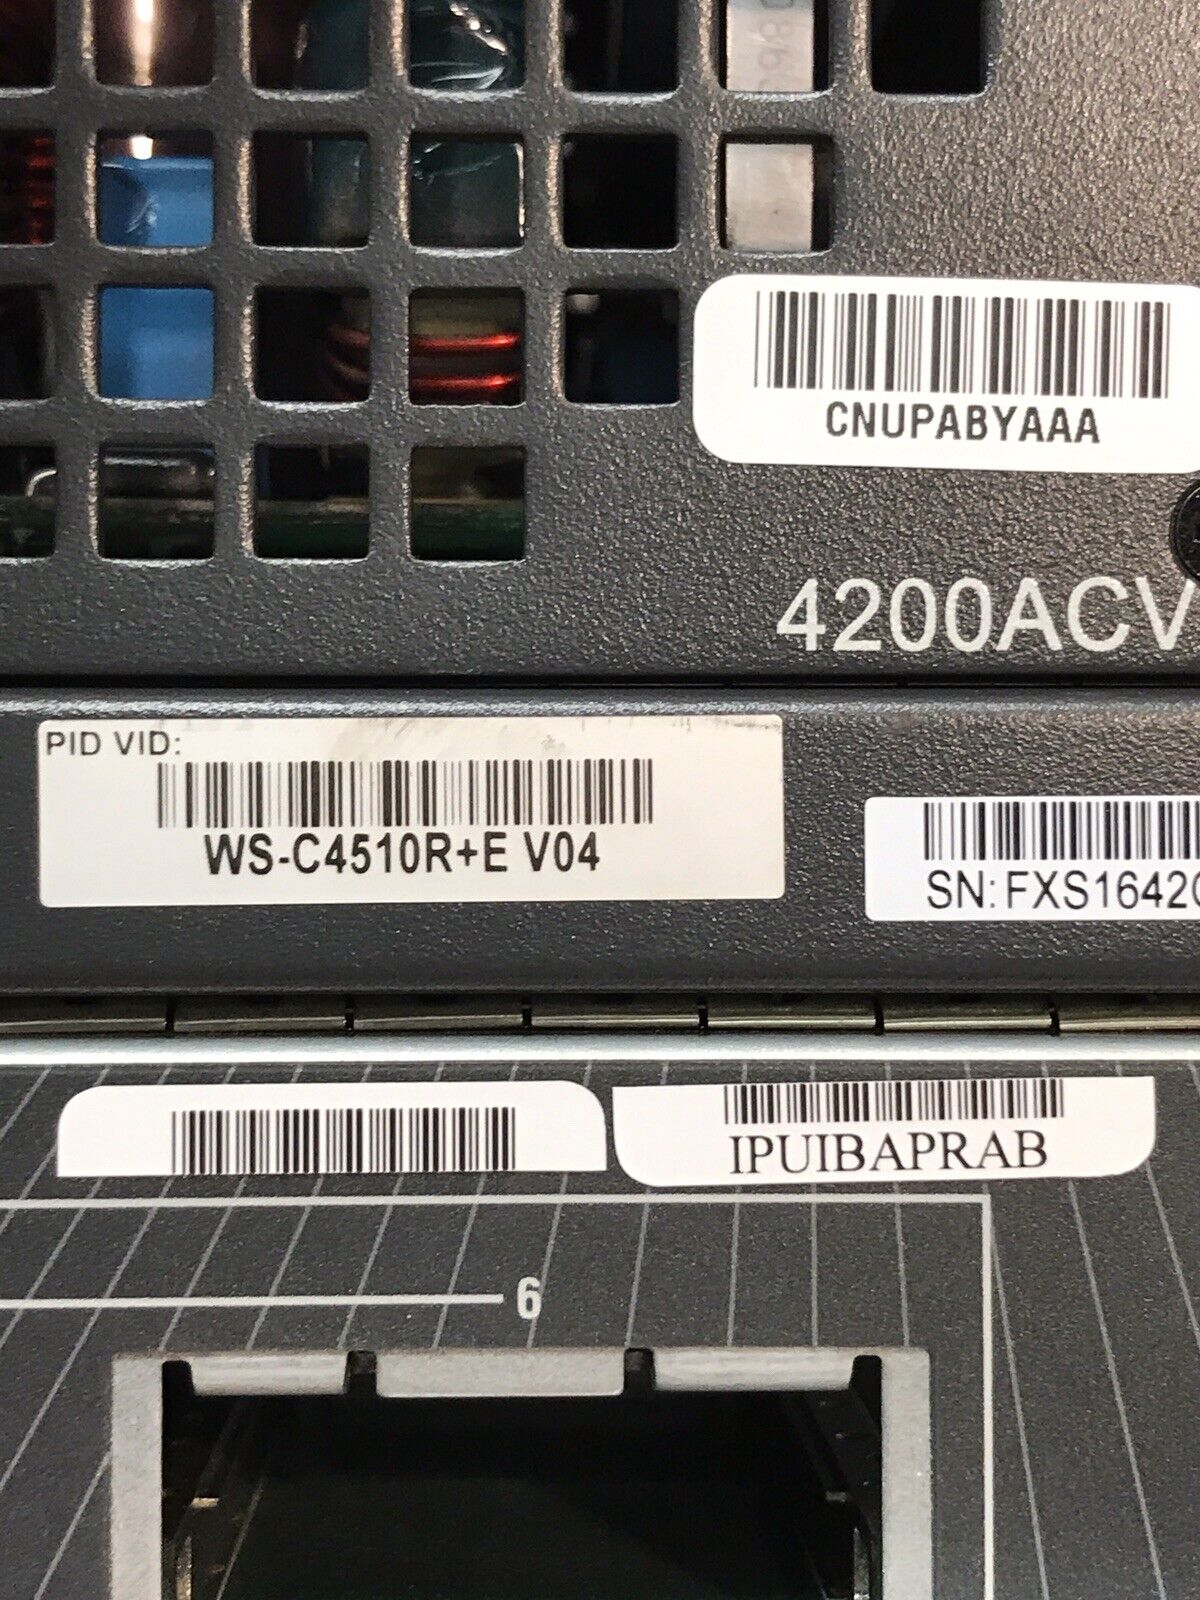 Cisco Catalyst C4510R+E WS-X45-SUP7-E X4606-X2-E 7x X4748-UPOE+E PoE 2x 4200ACV.